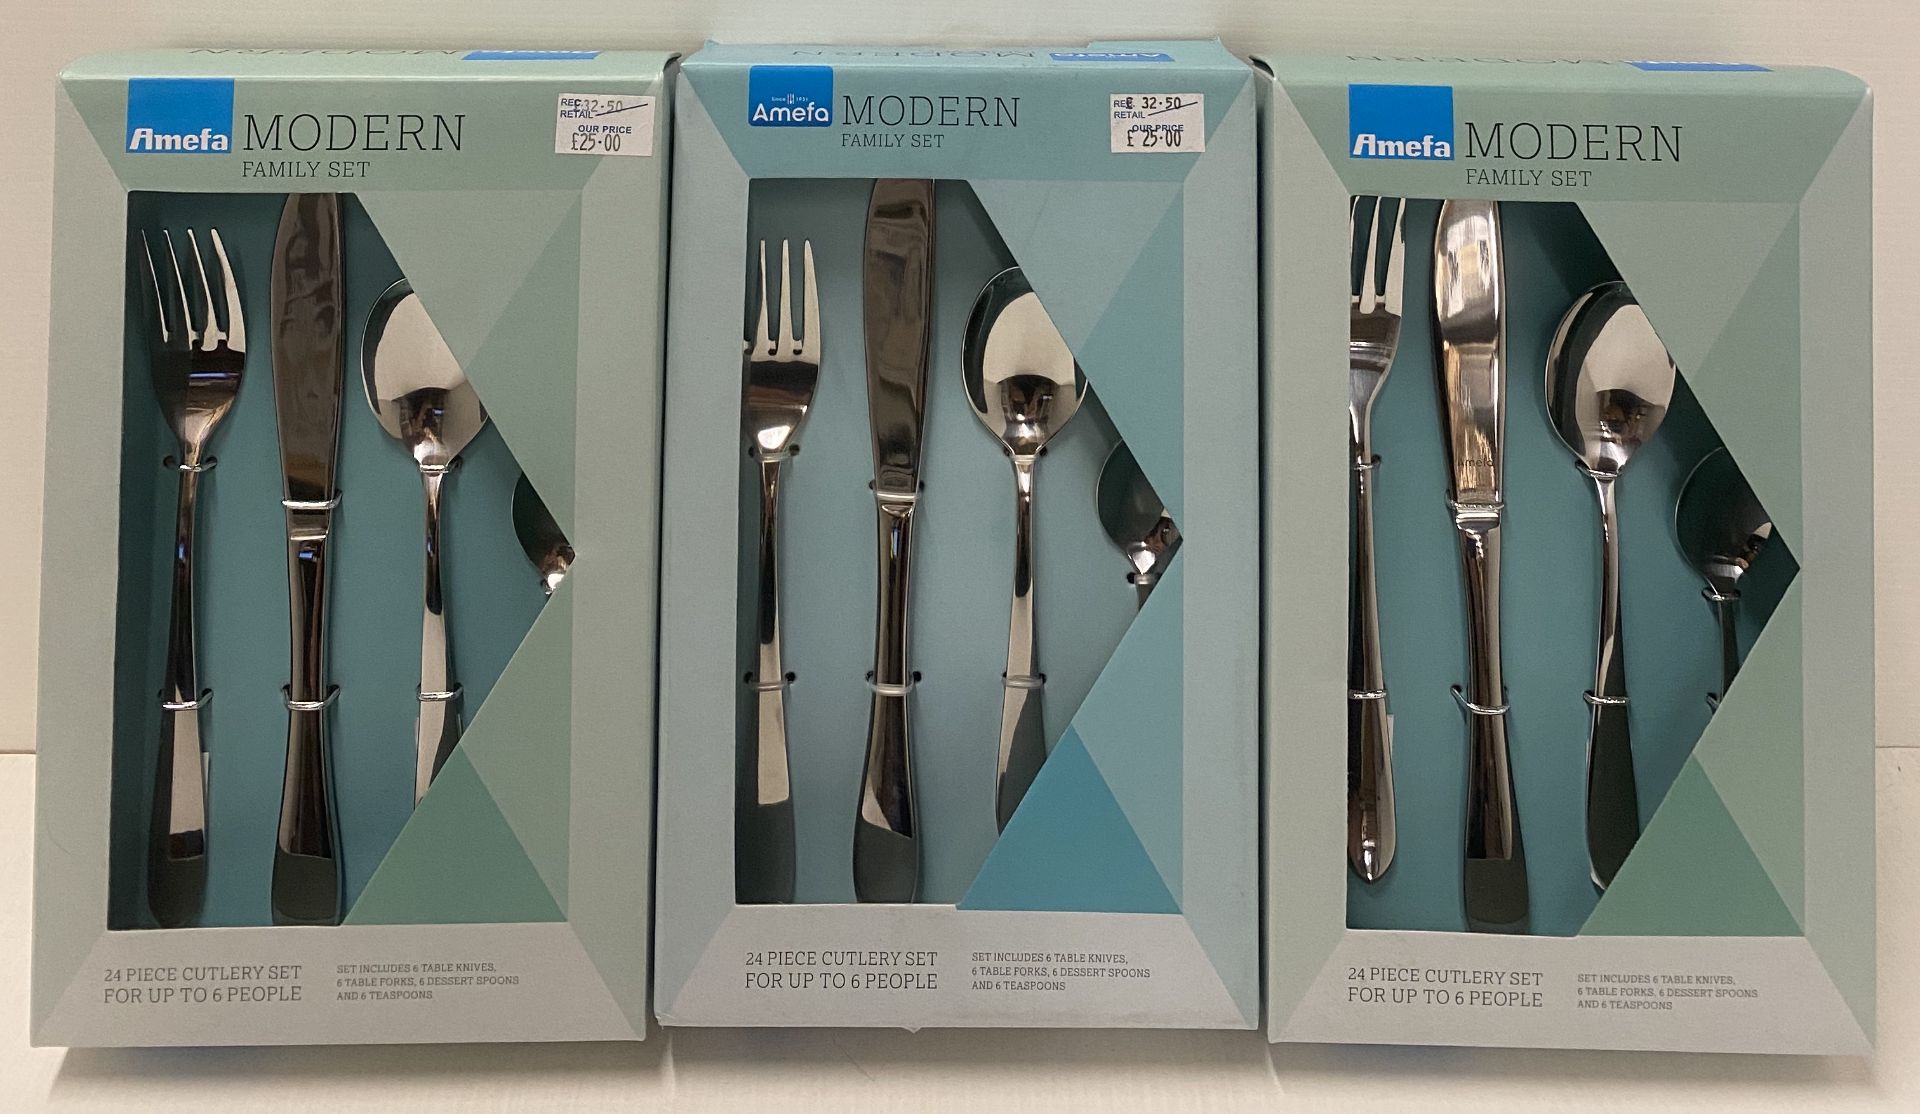 3 x Amefa Modern 24 piece Sure cutlery family sets RRP £32.